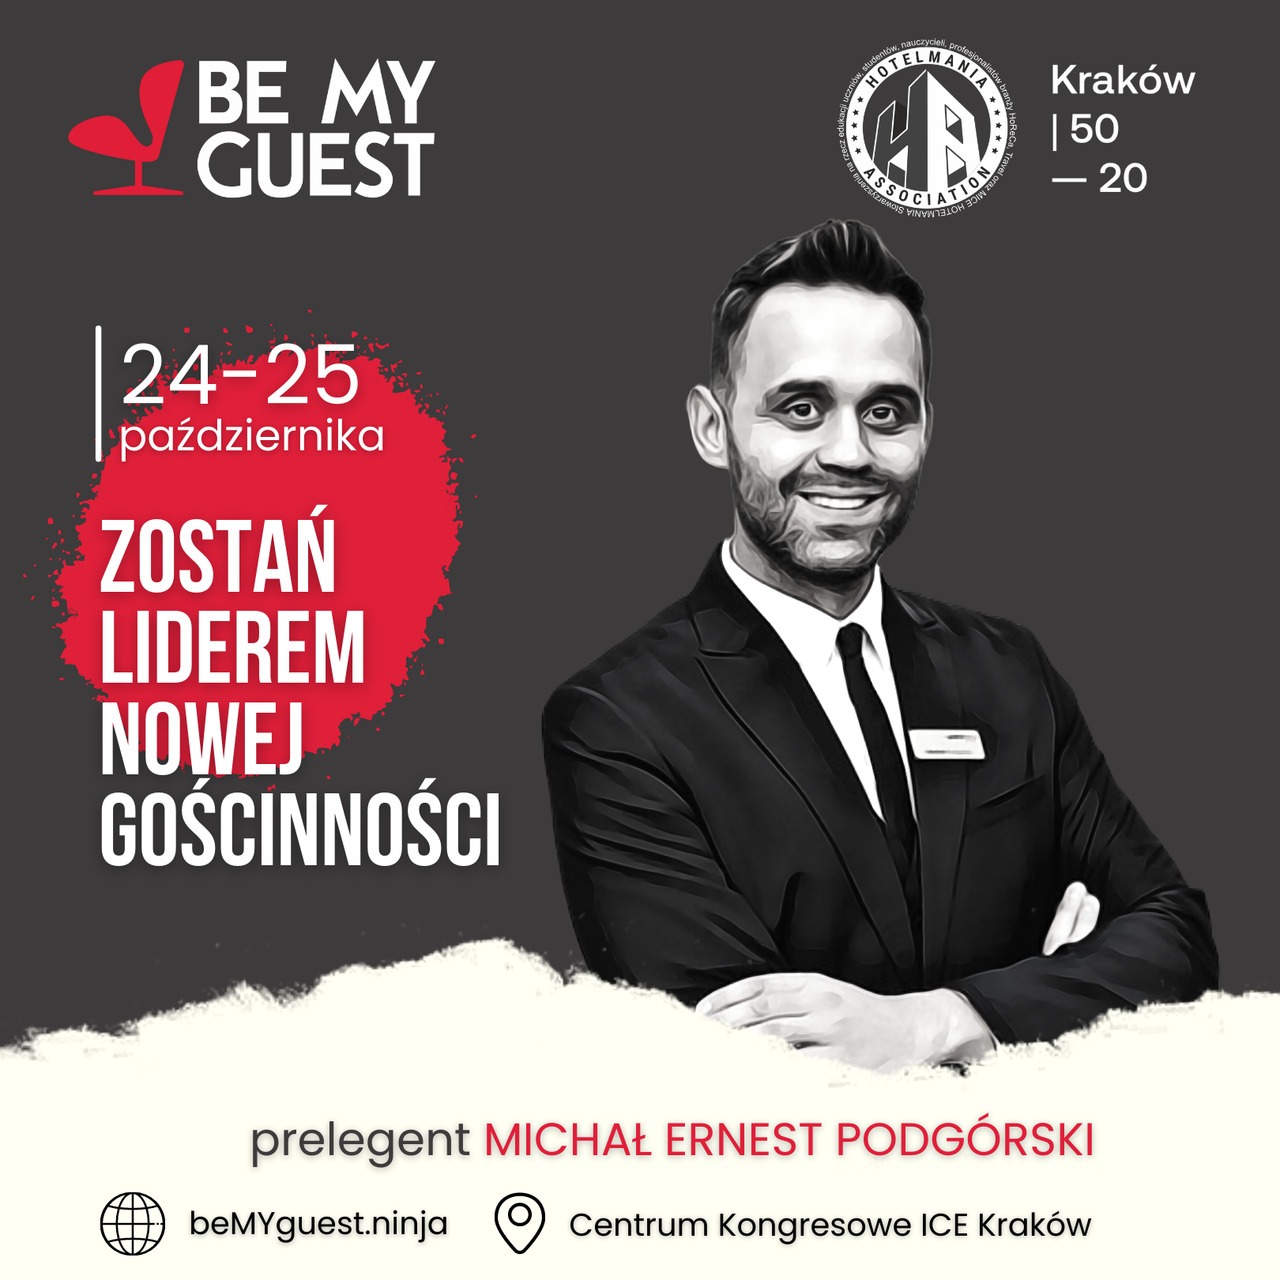 Be my Guest posty FB insta Michal Ernest Podgorski